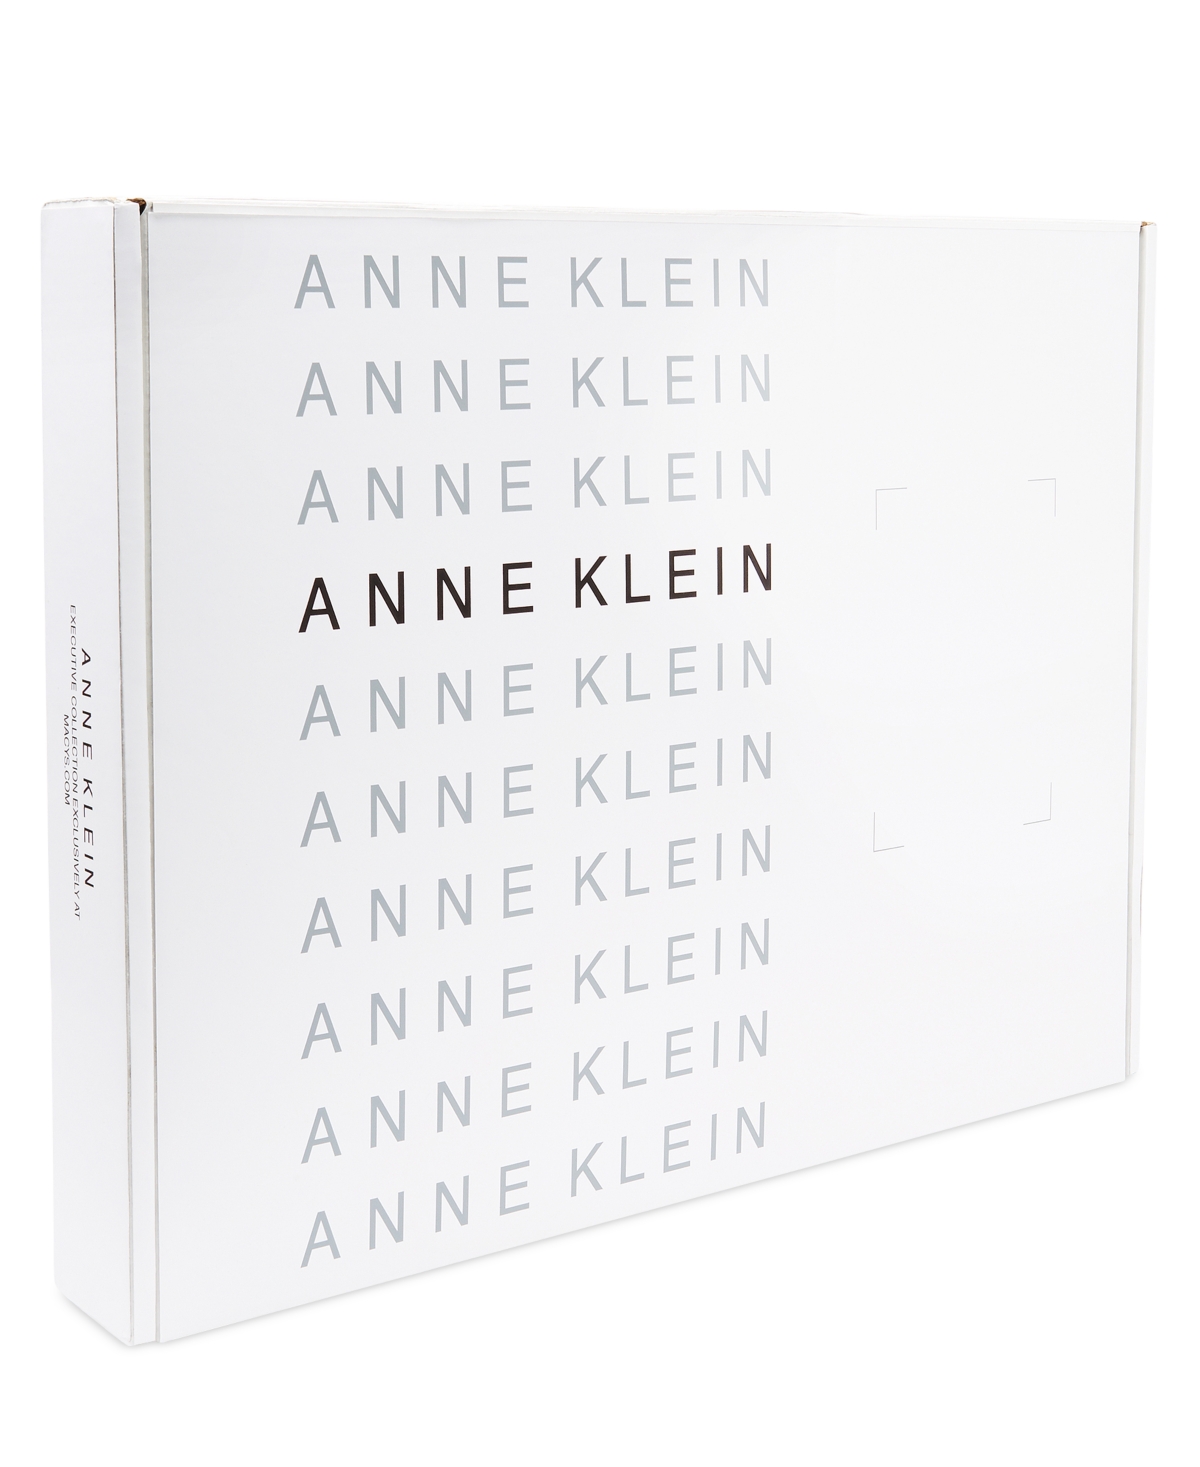 Shop Anne Klein Women's Plaid One-button Notch-collar Pantsuit In Anne Black Combo